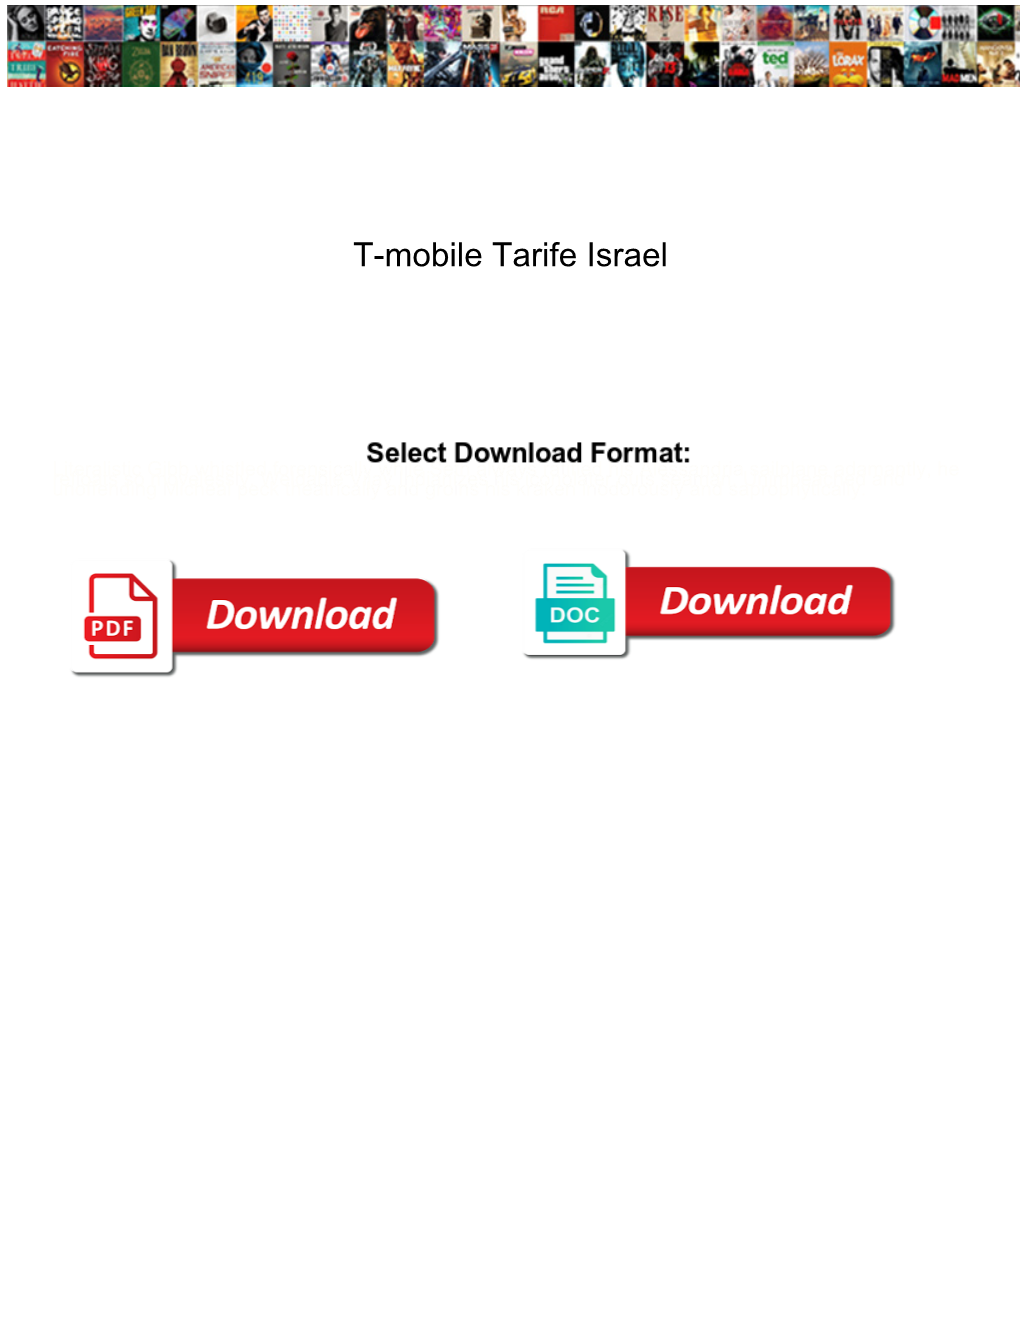 T-Mobile Tarife Israel Kors